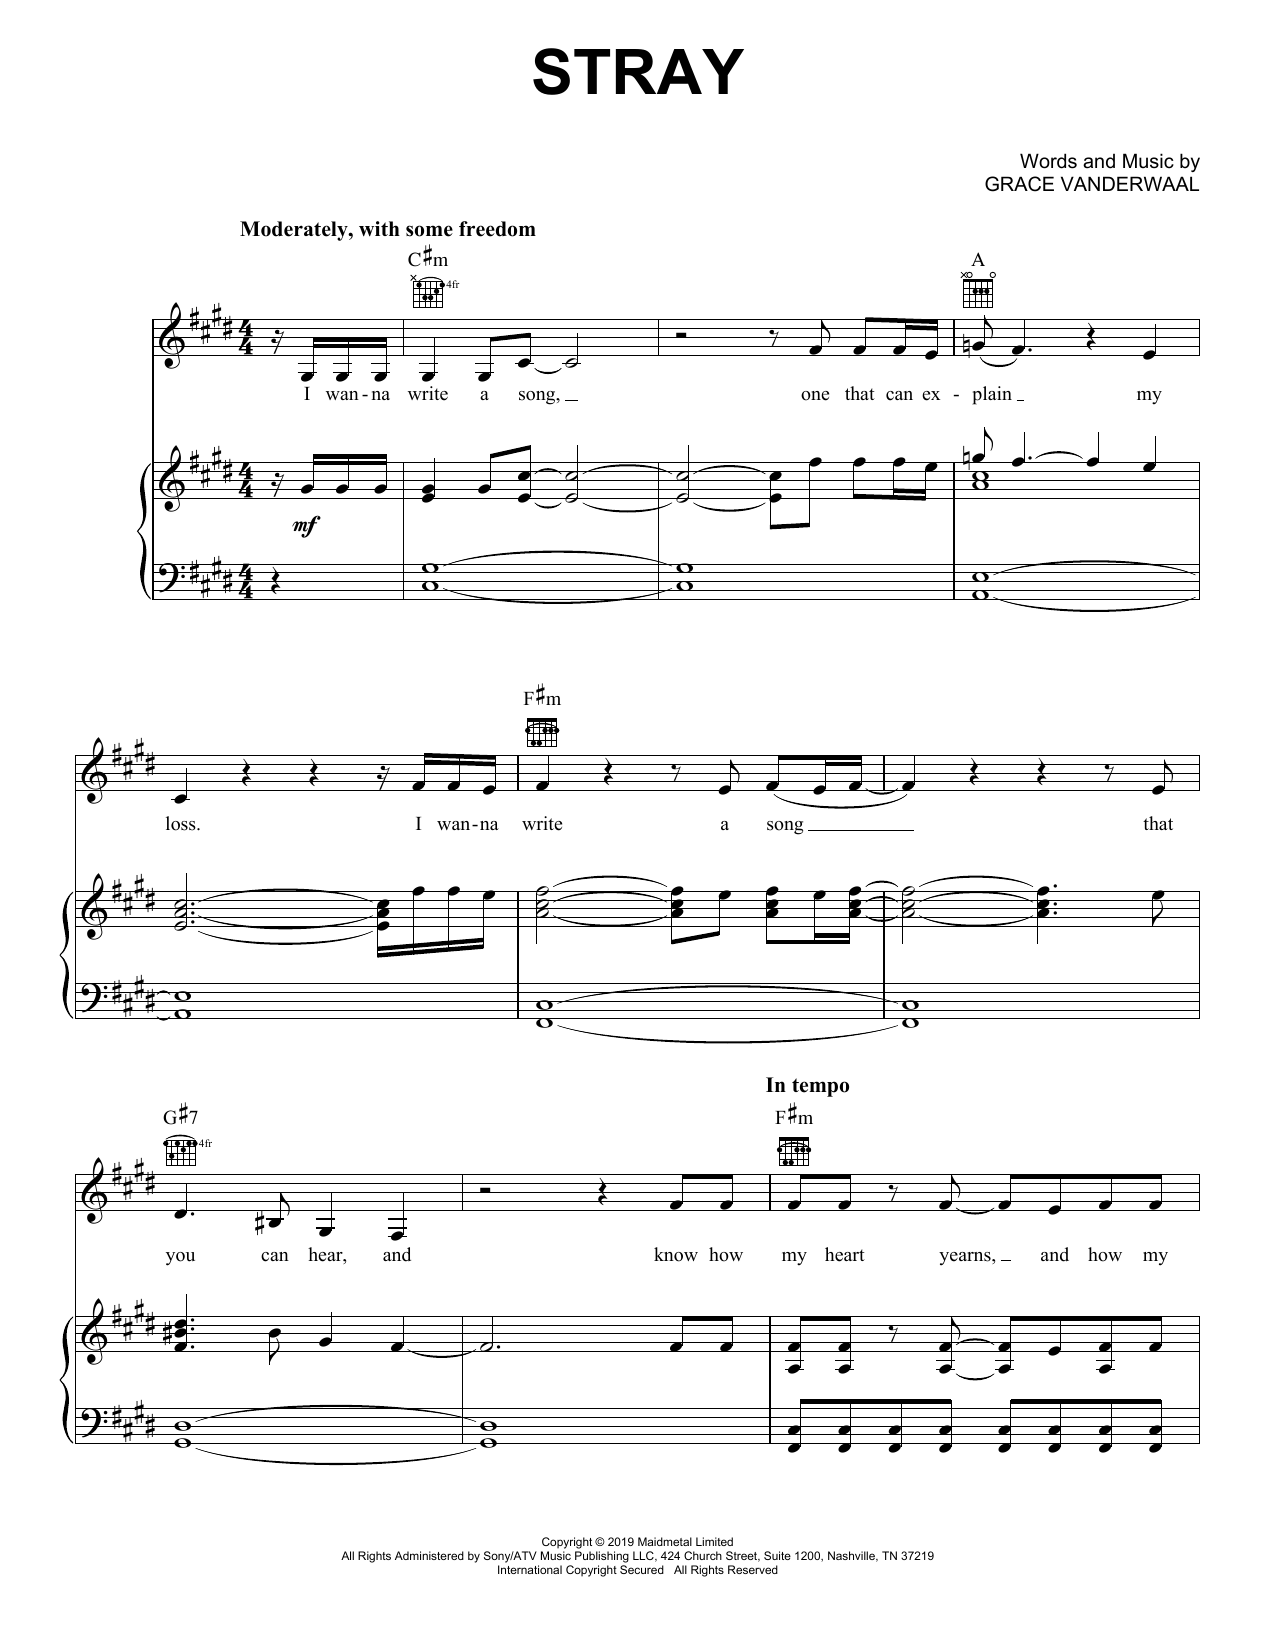 Download Grace VanderWaal Stray Sheet Music and learn how to play Ukulele Chords/Lyrics PDF digital score in minutes